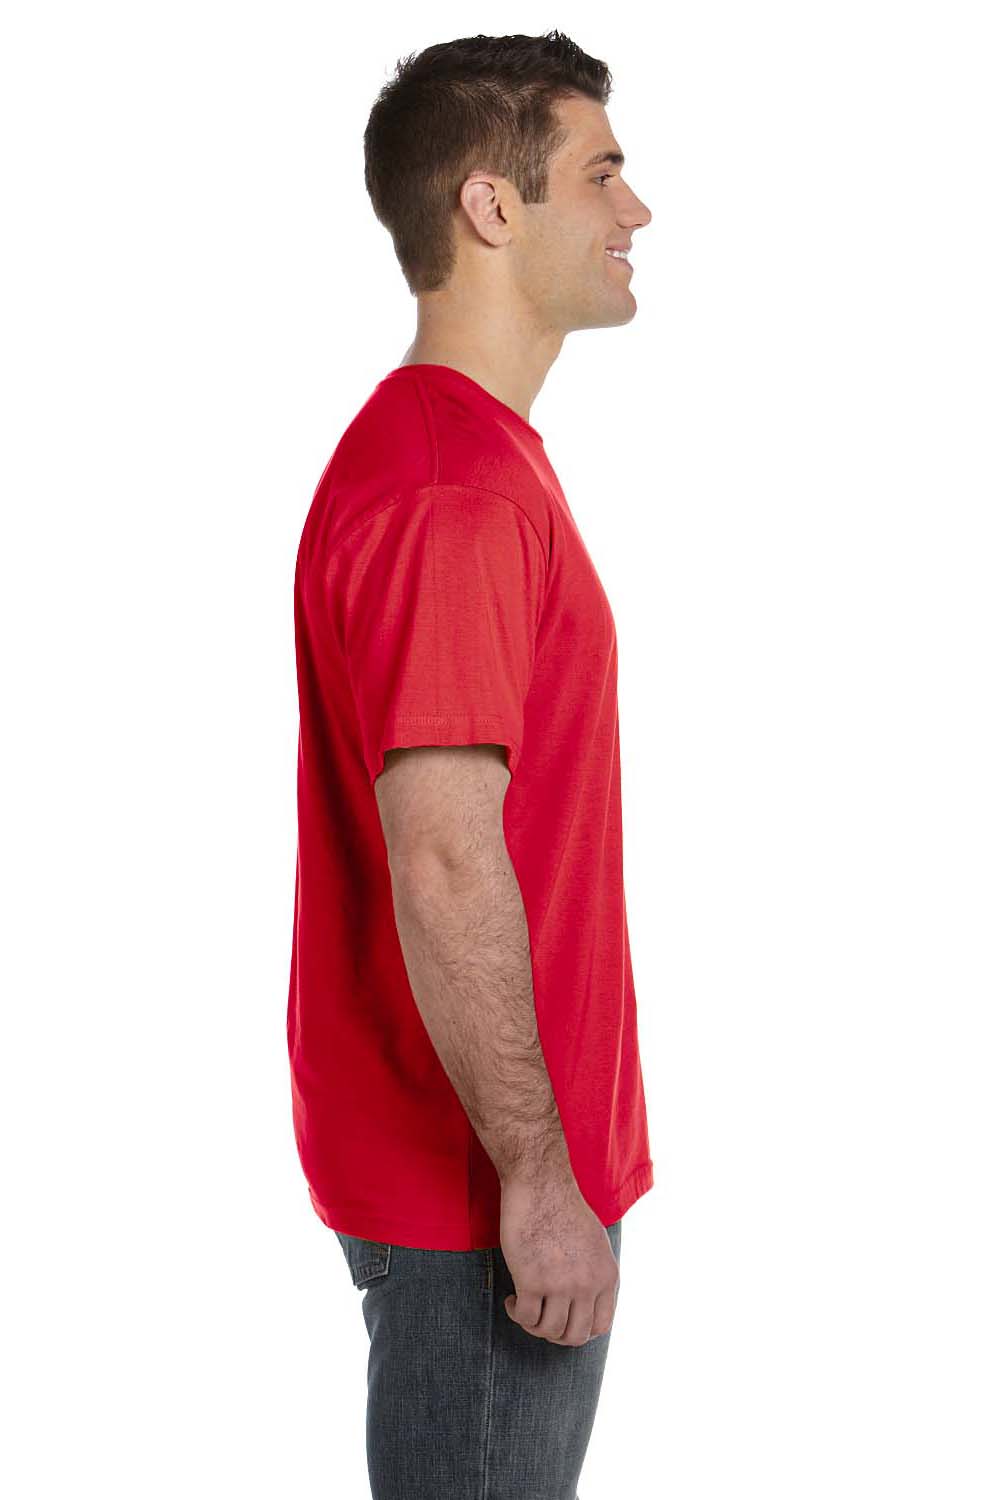 LAT 6901 Mens Fine Jersey Short Sleeve Crewneck T-Shirt Red Side